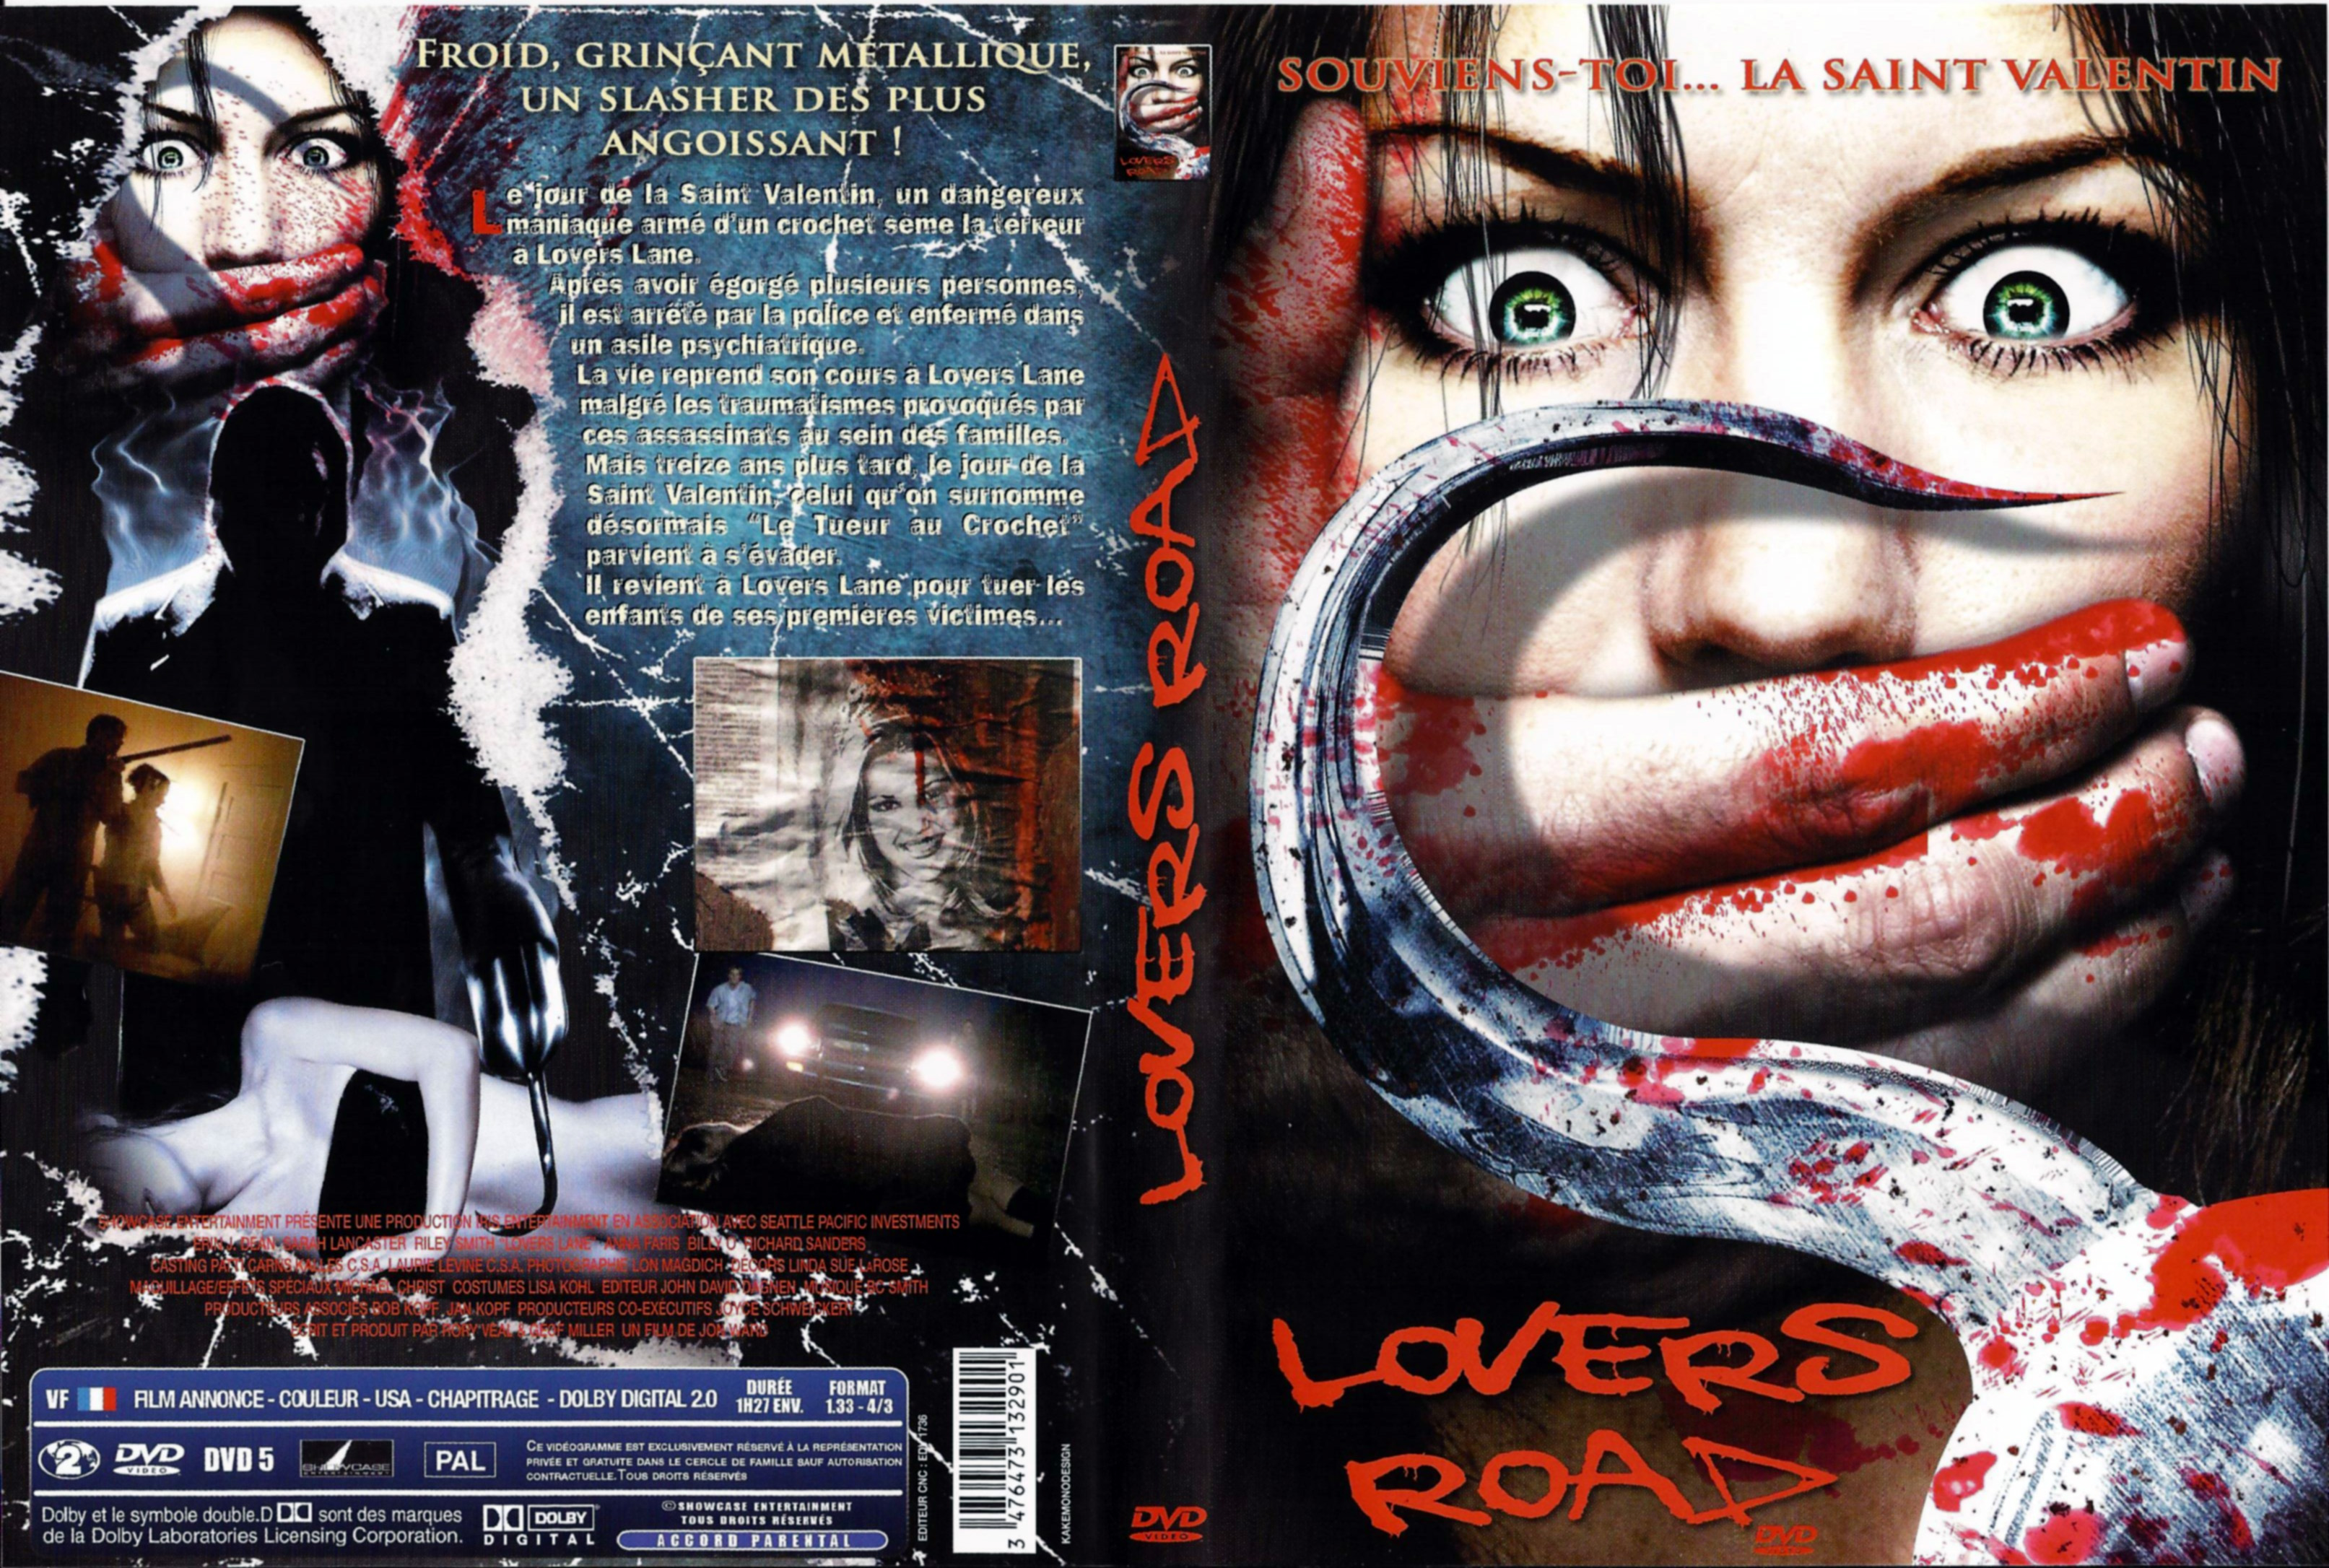 Jaquette DVD Lovers Road v2